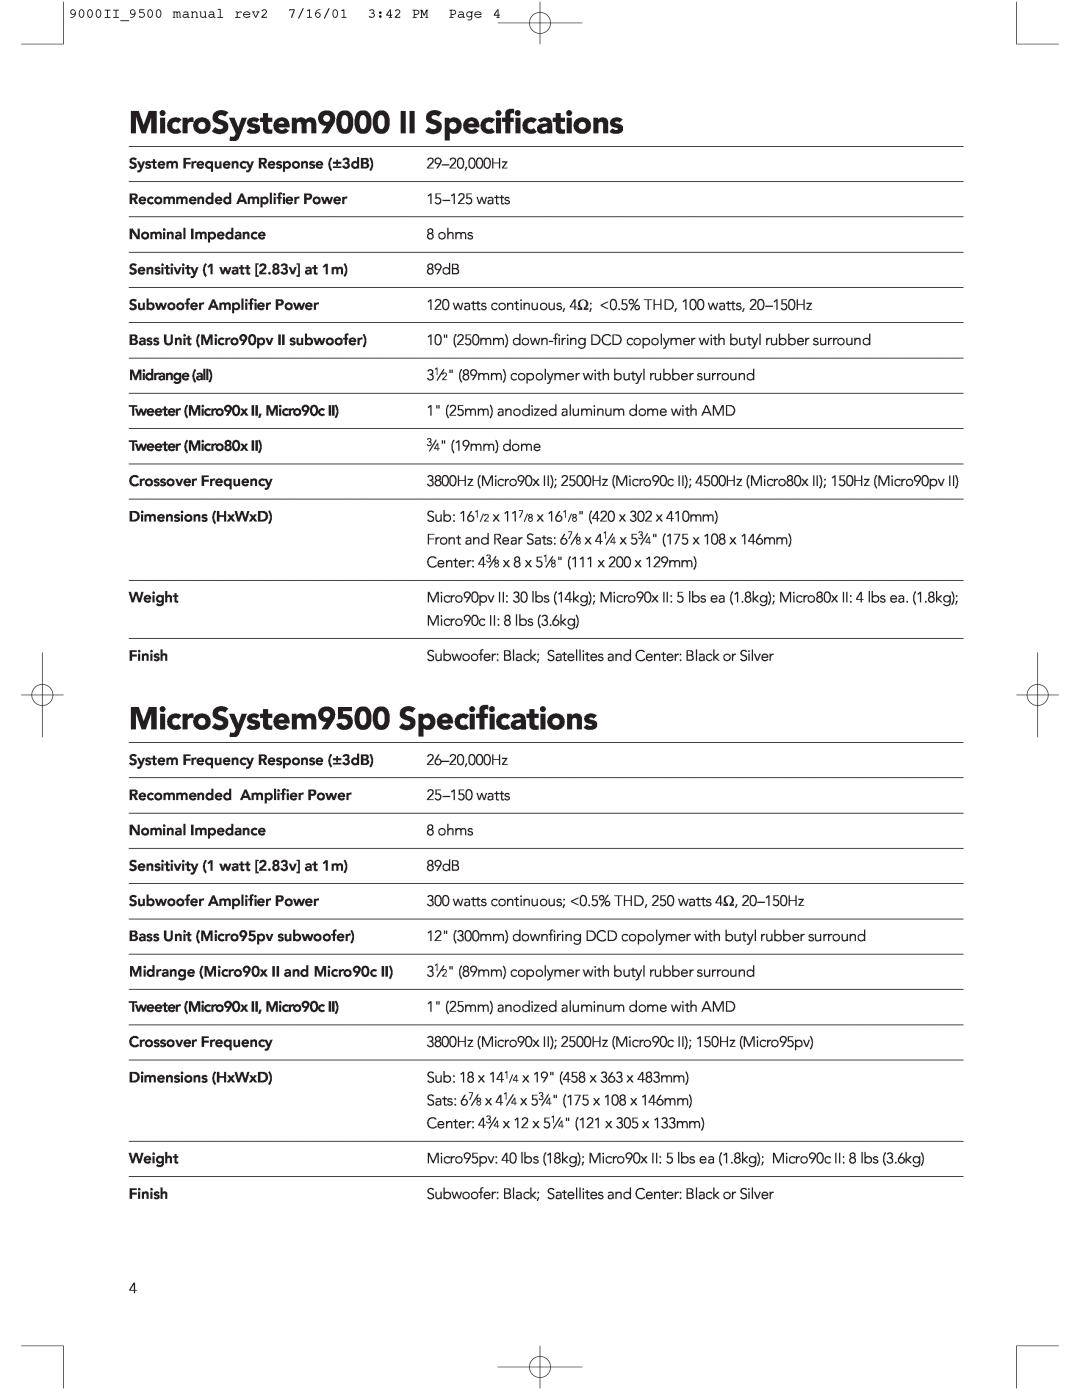 Boston Acoustics manual MicroSystem9000 II Speciﬁcations, MicroSystem9500 Speciﬁcations 